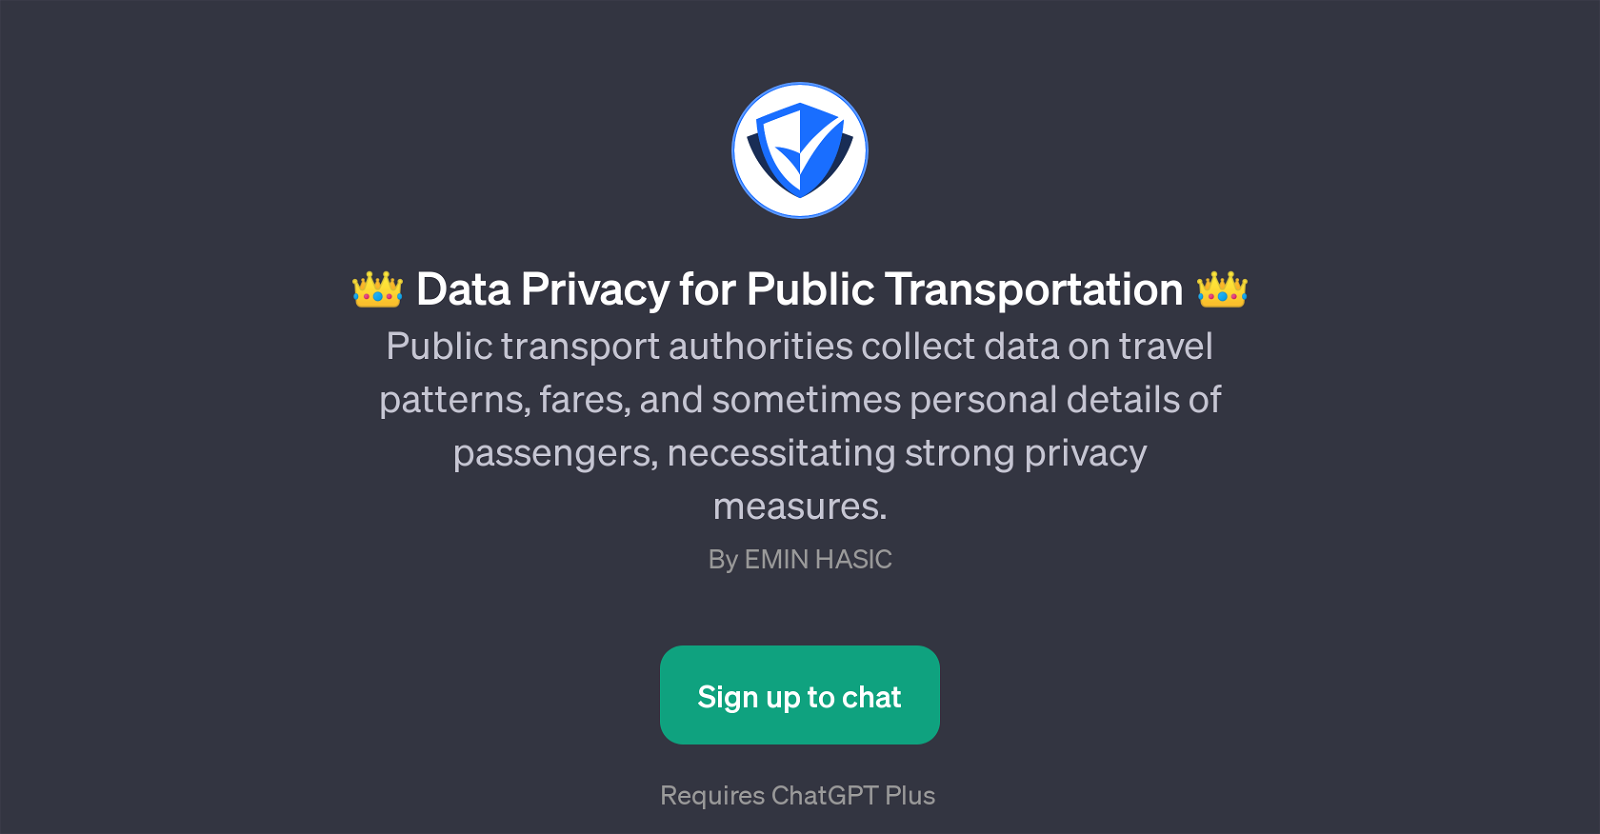 Data Privacy for Public Transportation GPT website